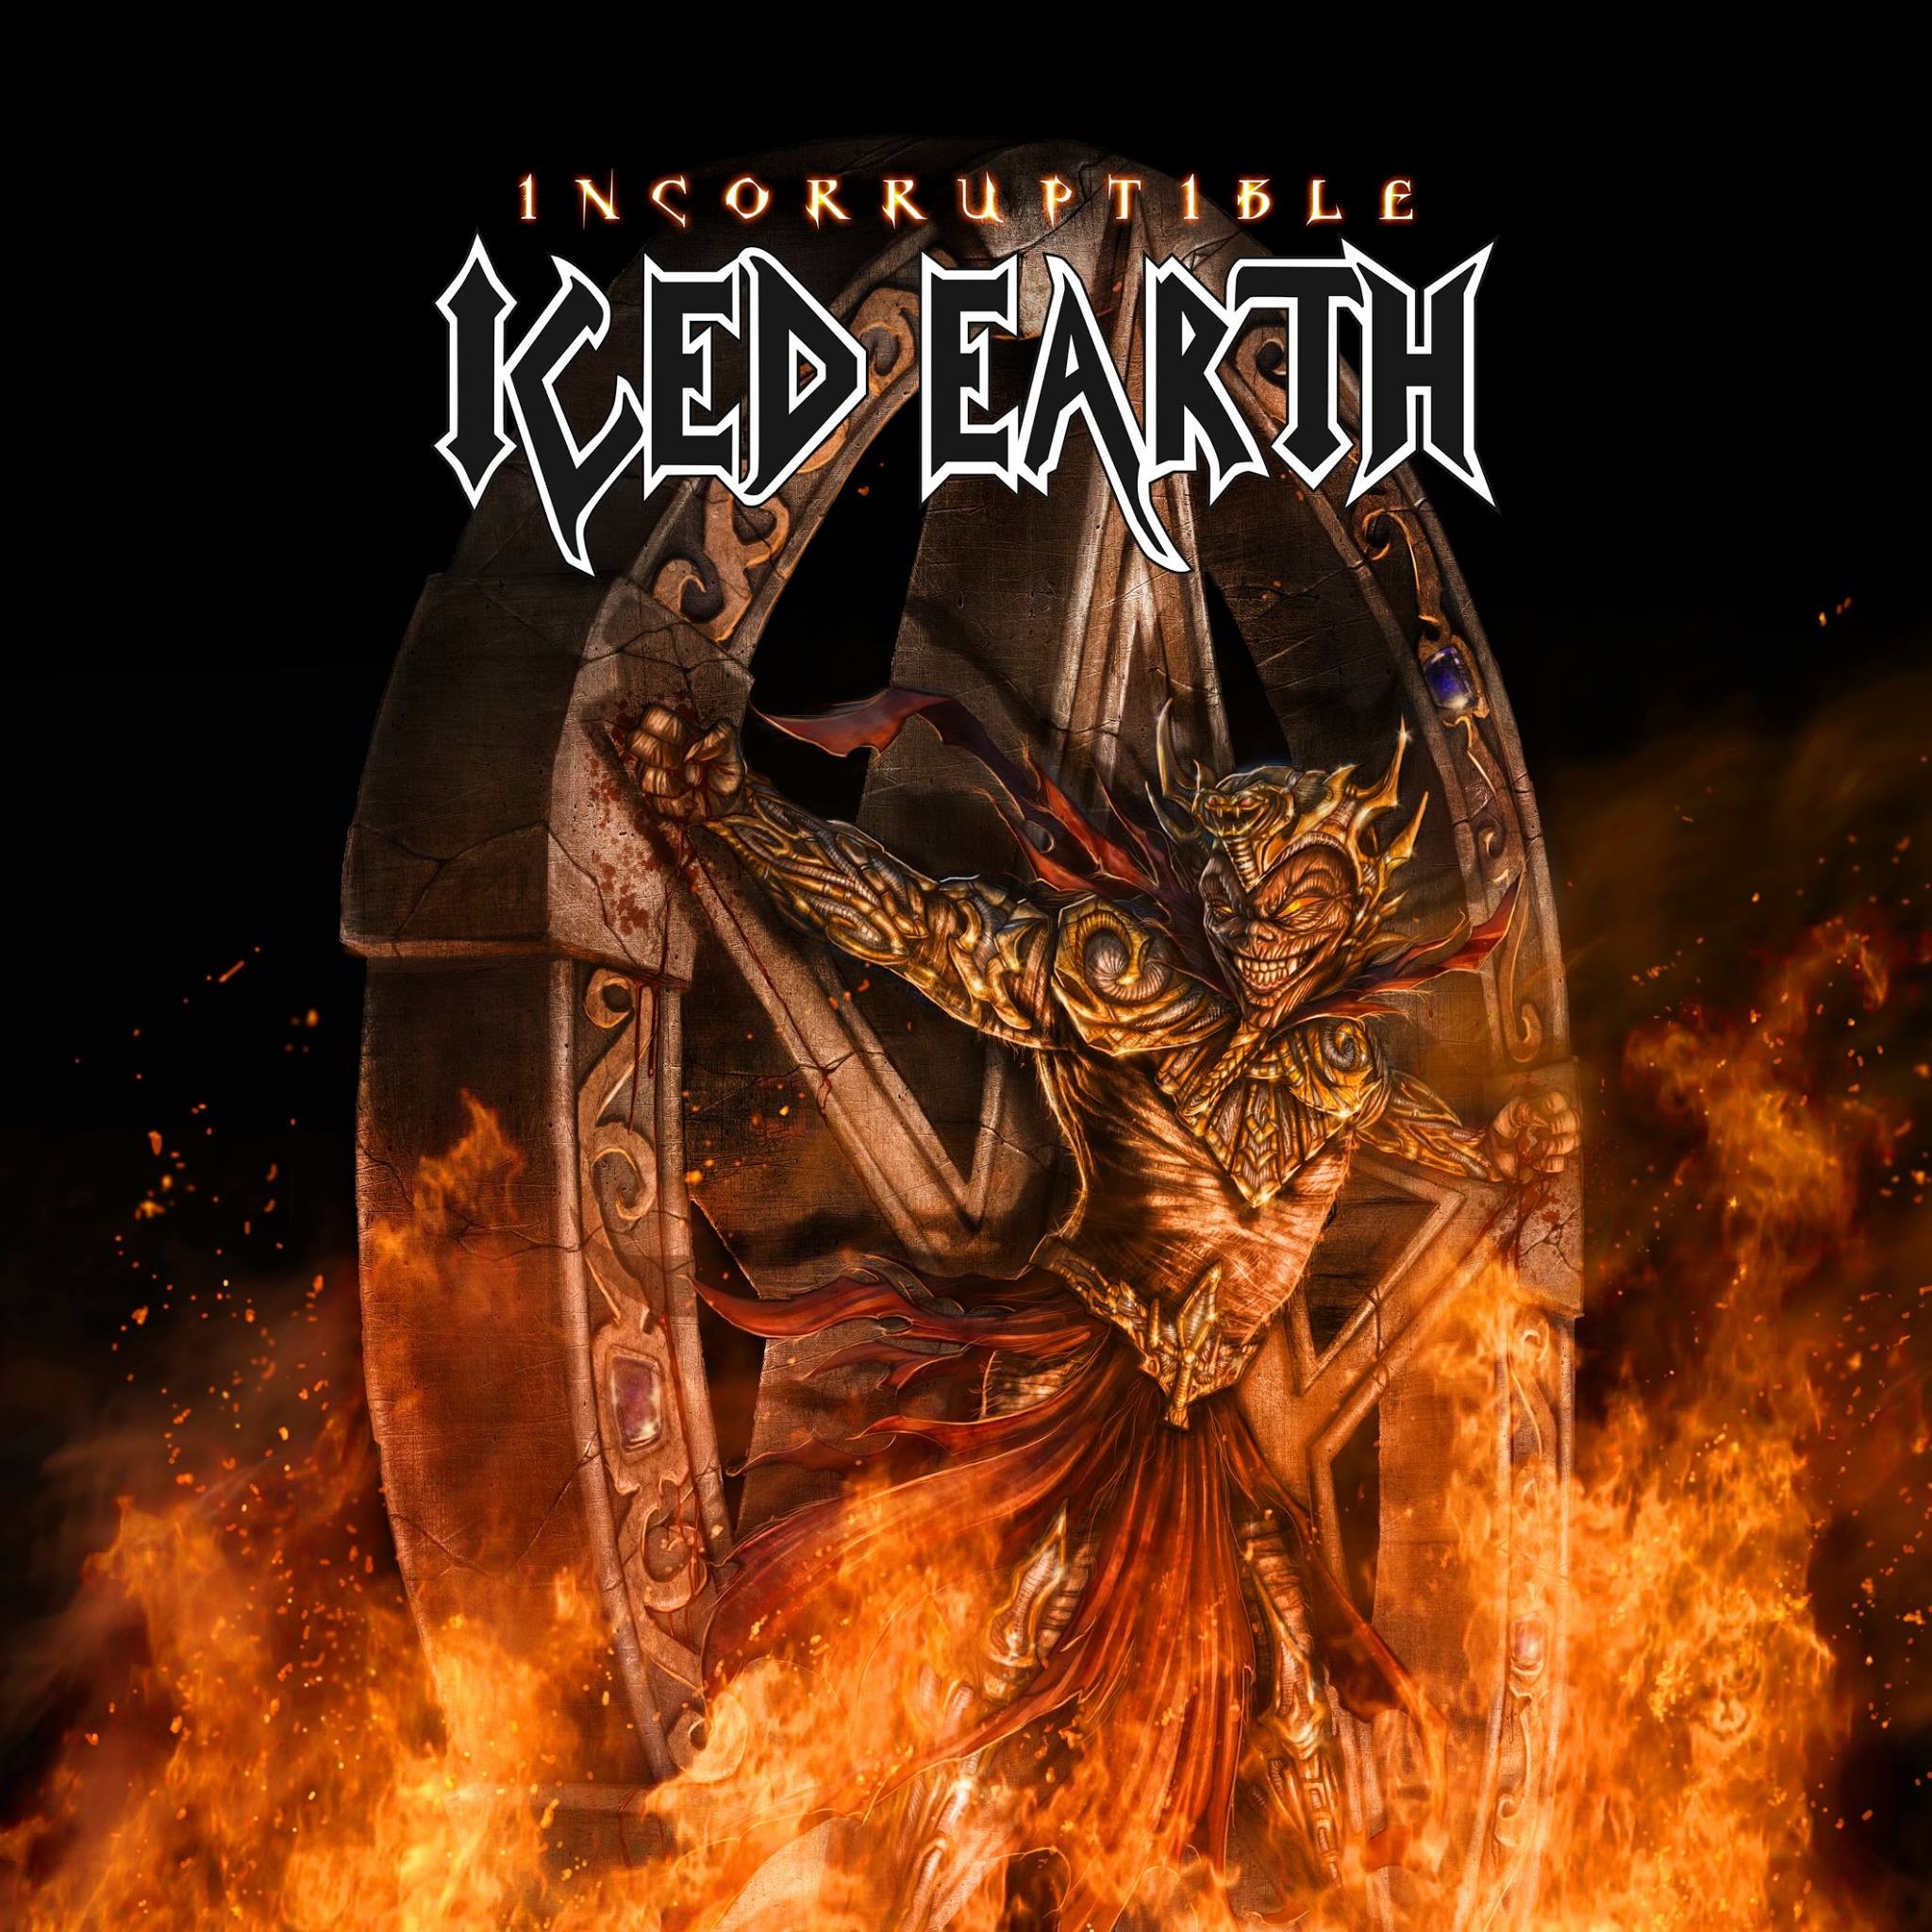 2048x2048 Iced Earth - Incorruptible - New Album 2017 - Heavy Metal Album Art